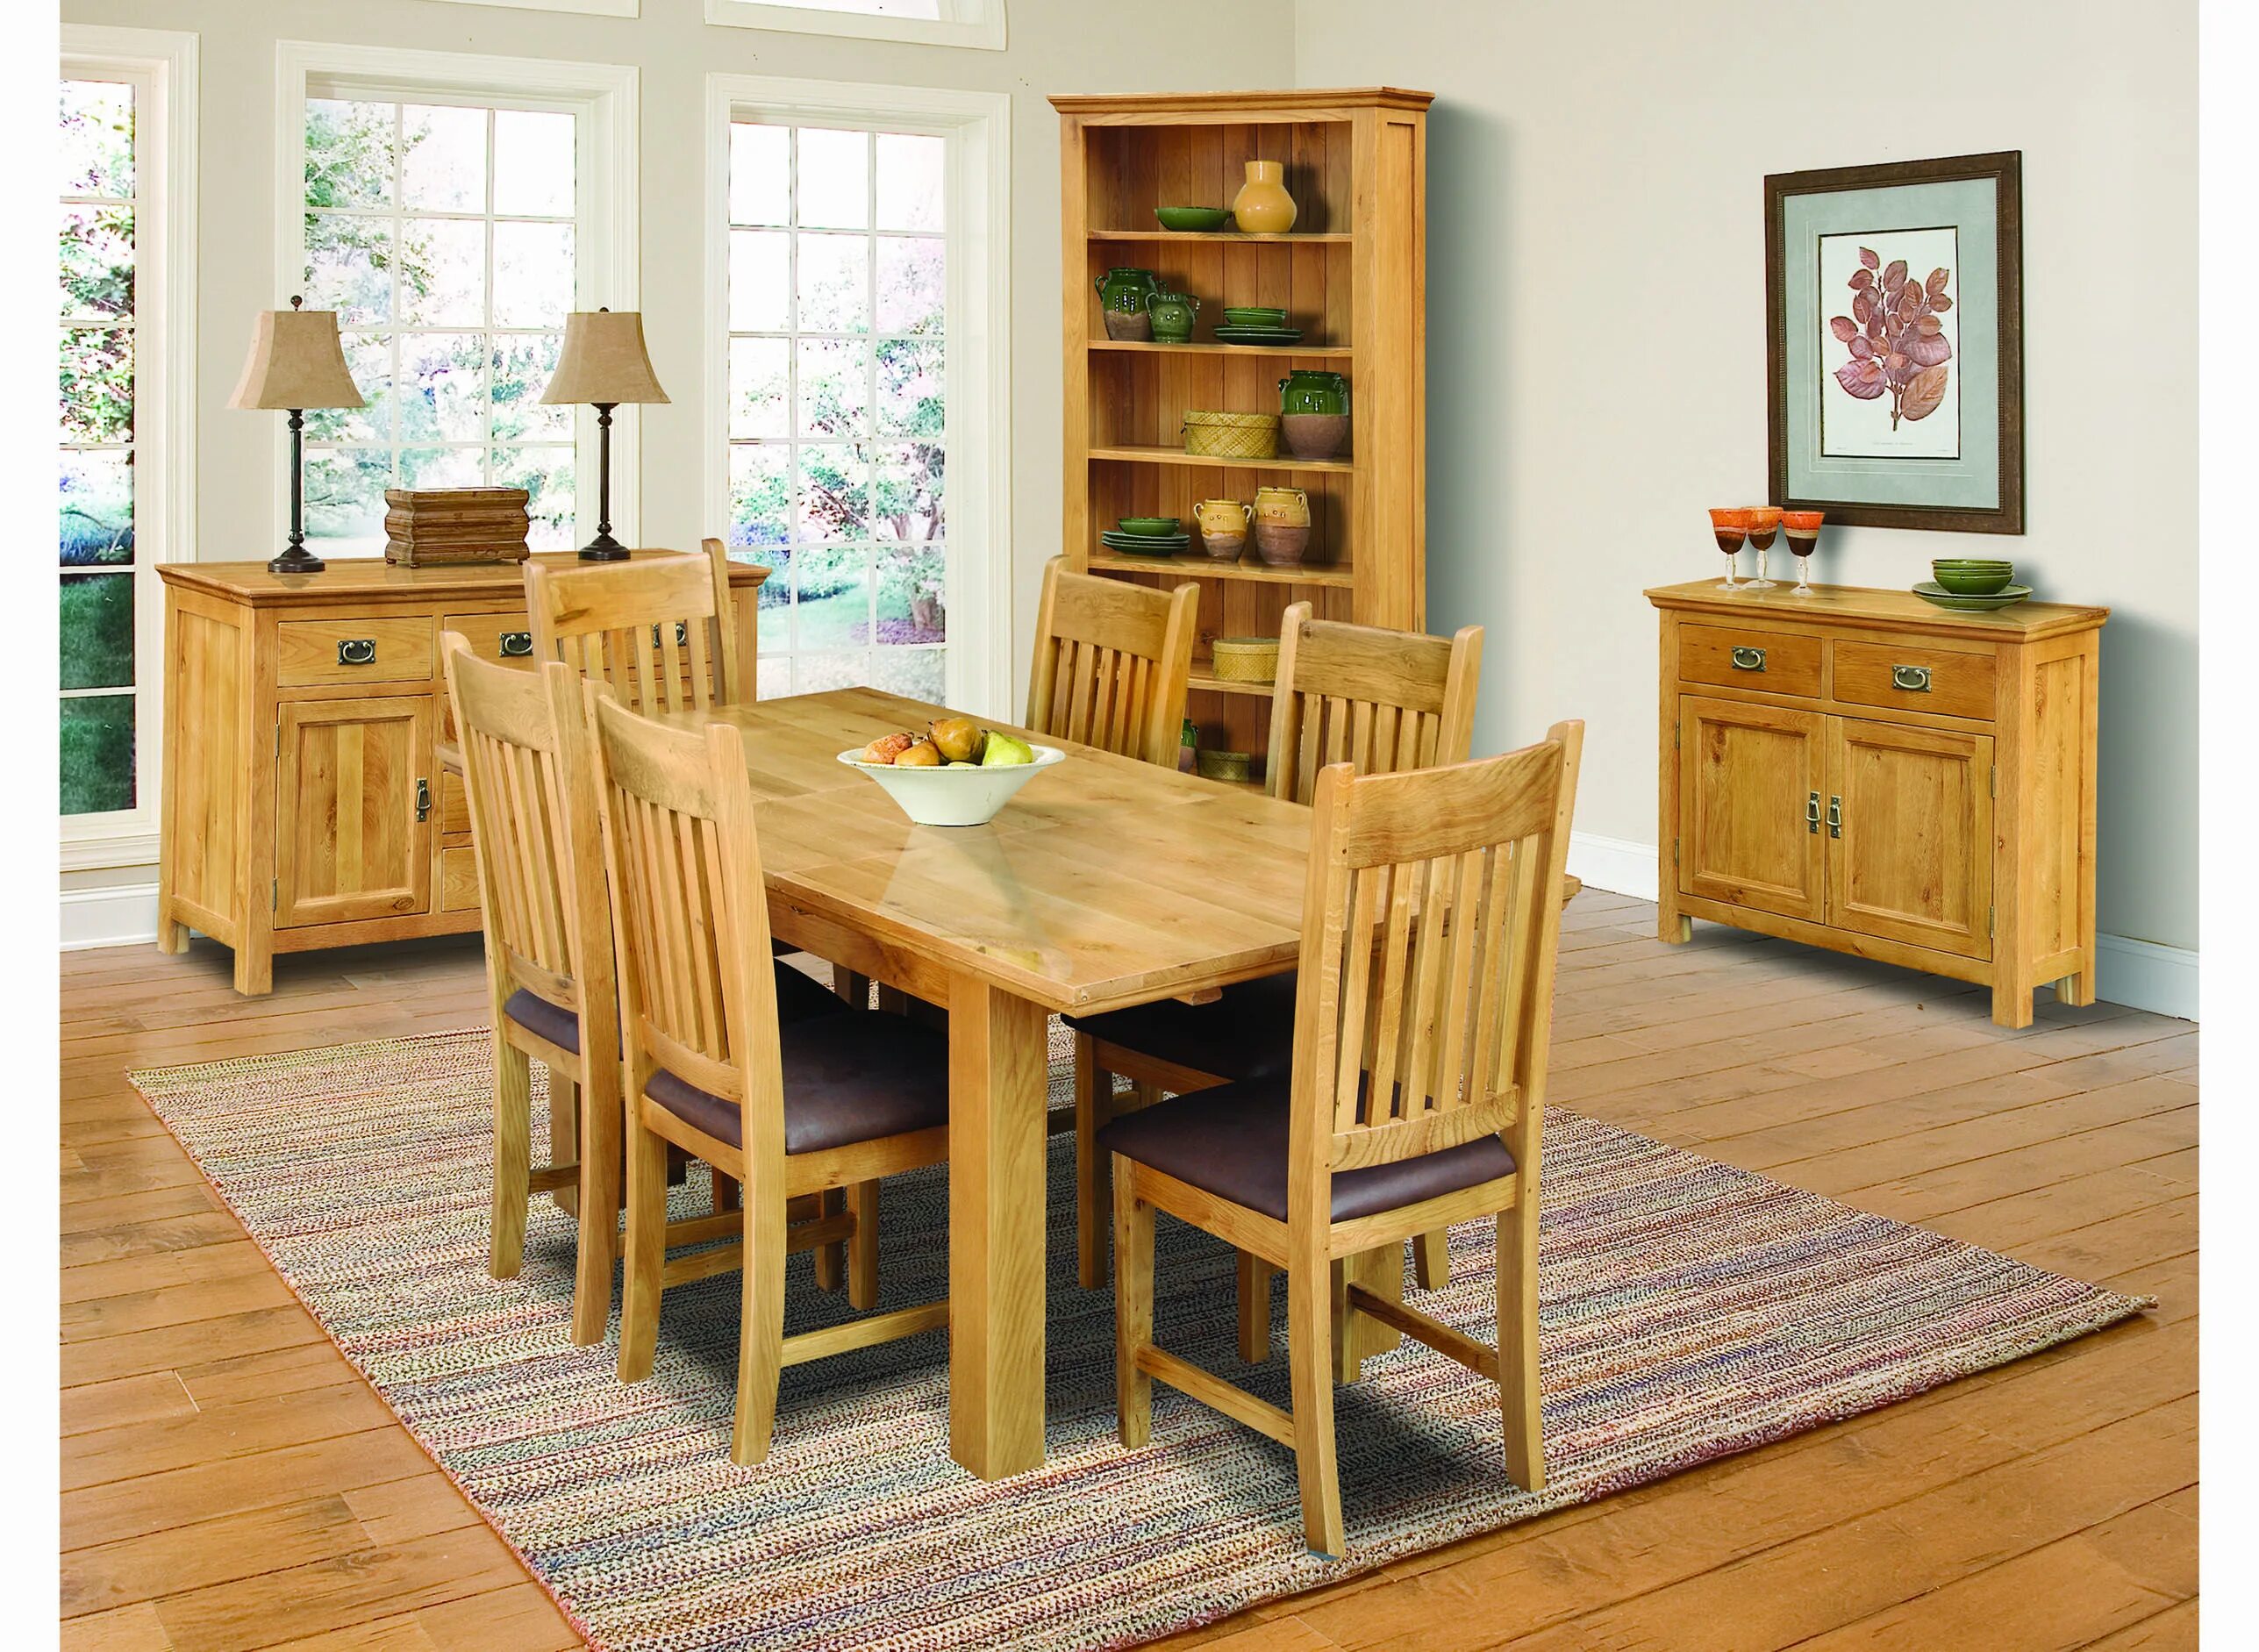 Wooden мебель. Деревянная мебель. Стол кухонный деревянный. Современная деревянная мебель. Деревянная мебель в интерьере.